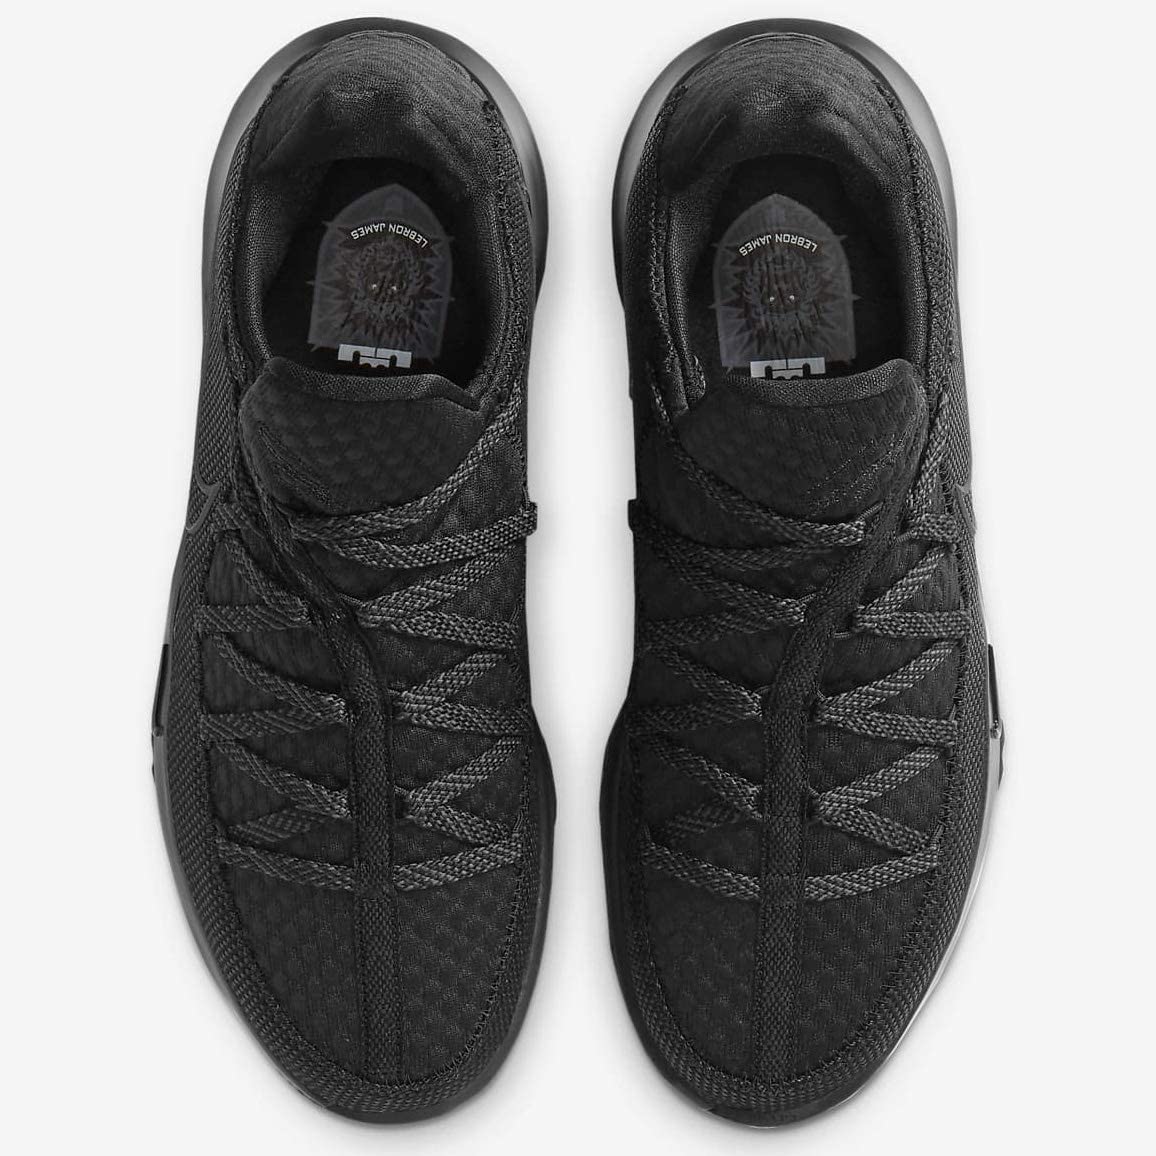 Nike LeBron 17 Low Basketball Shoes, Men's, Black - image 2 of 4